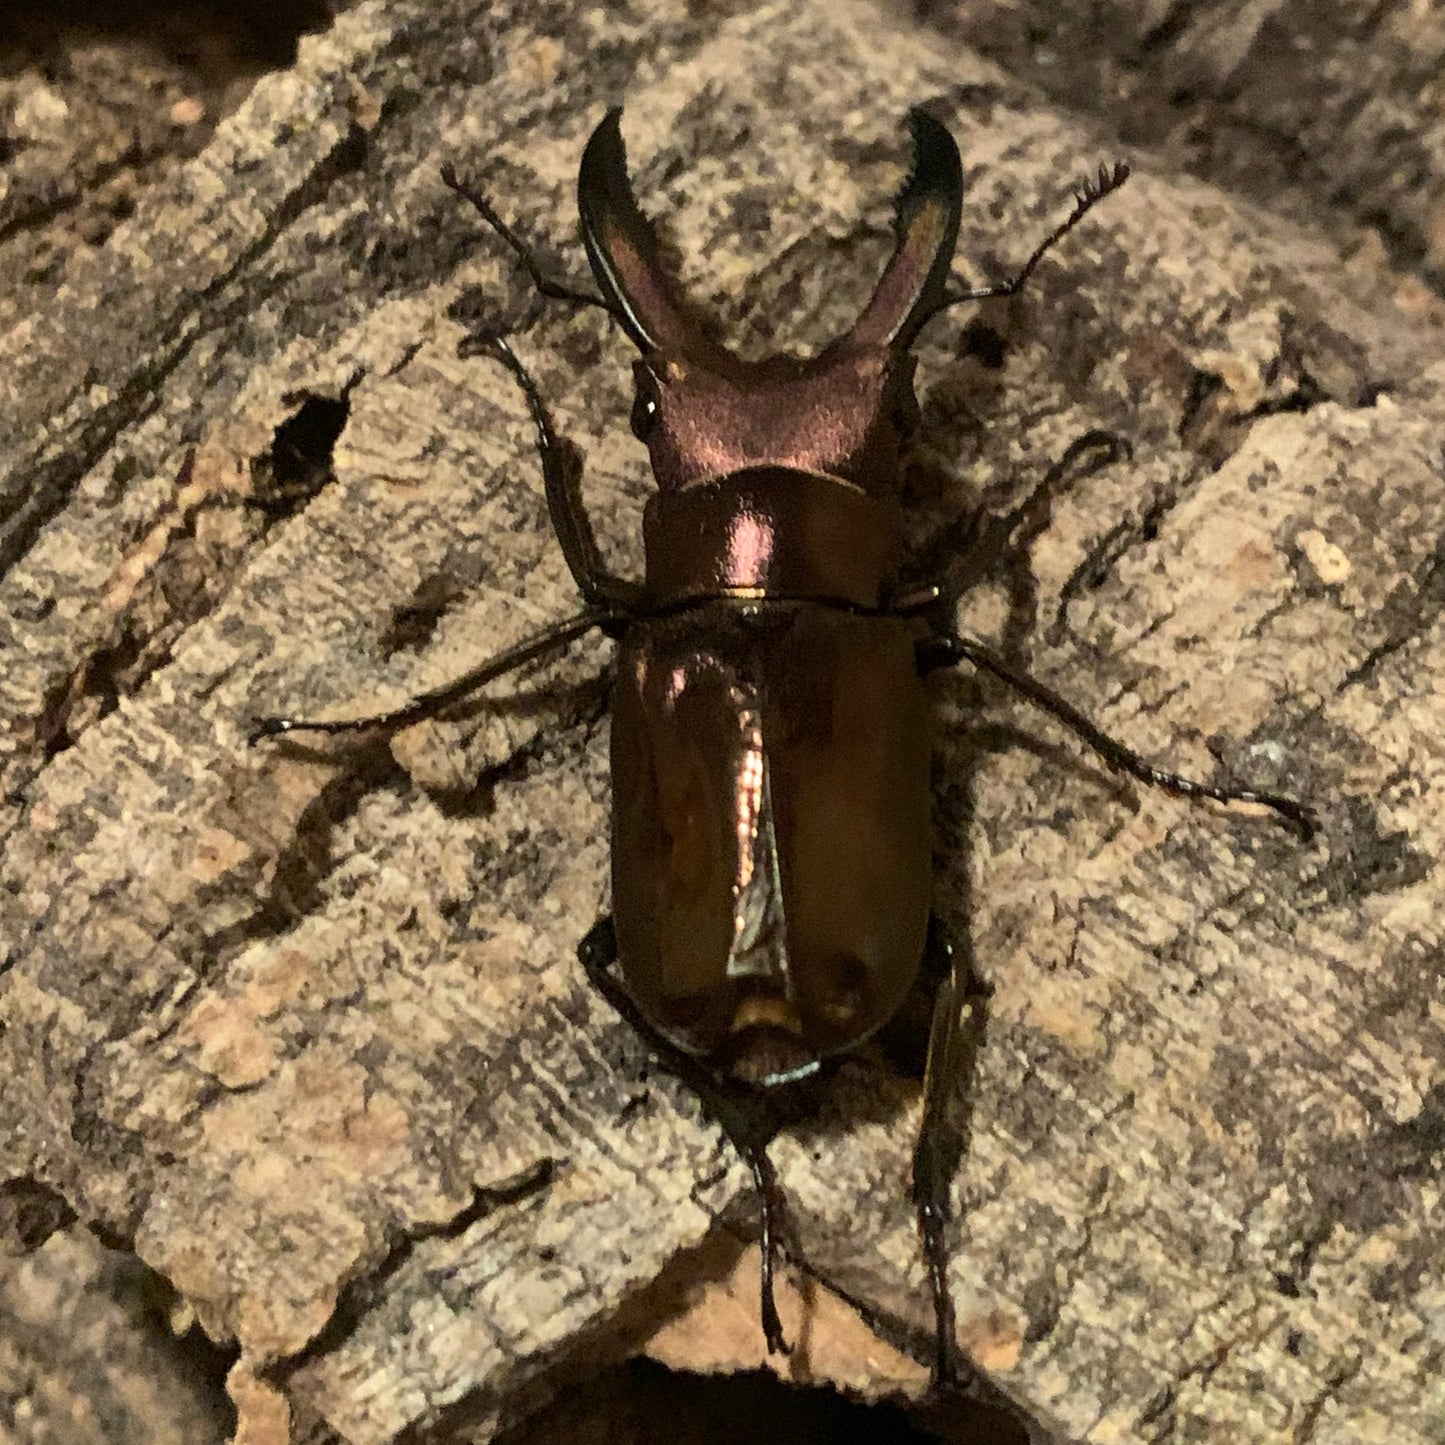 Metallic stag beetle minor male